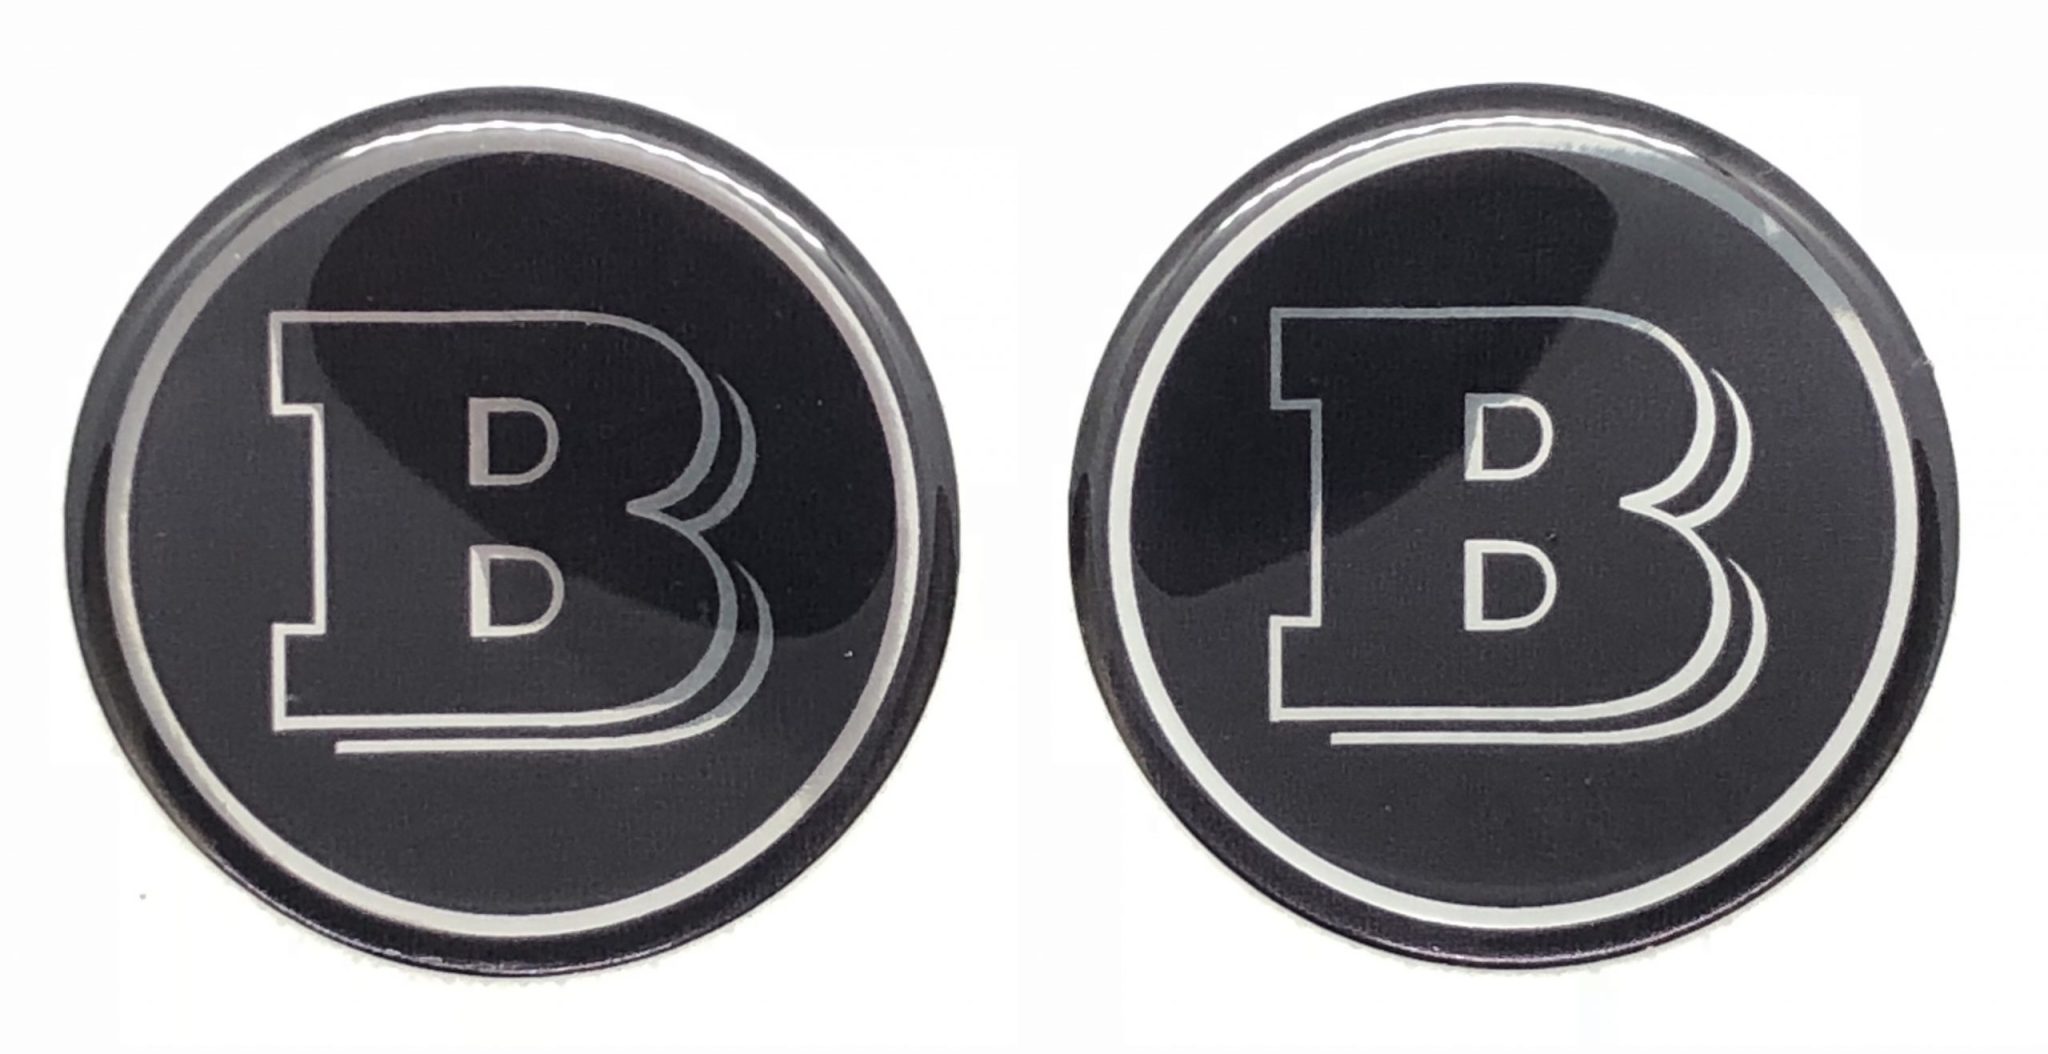 Brabus  3D sticker (Silver black)